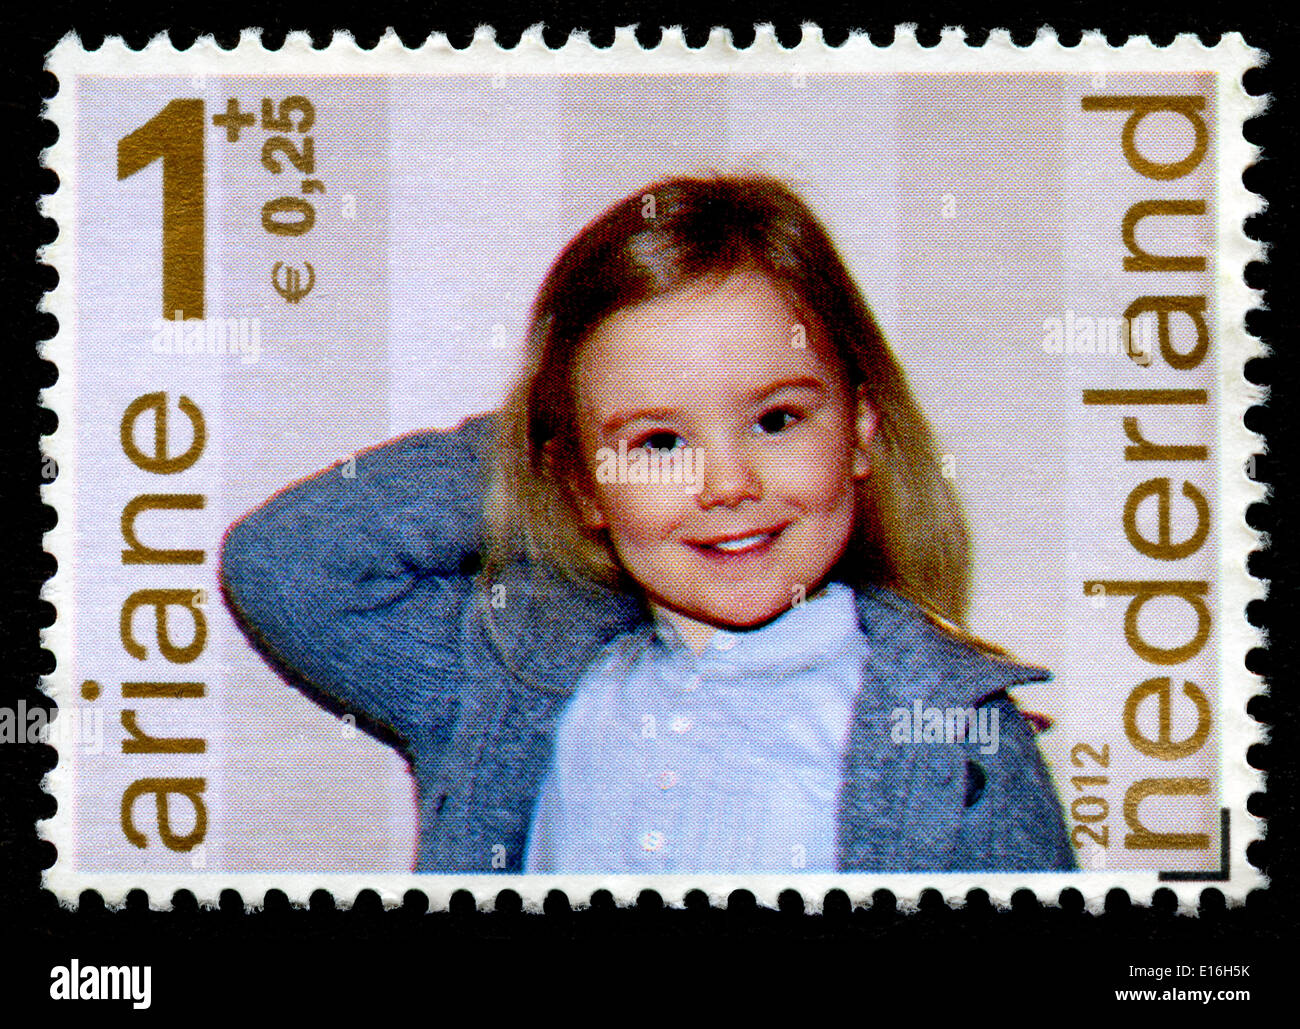 Netherlands postage stamp depicting princess Ariane Stock Photo